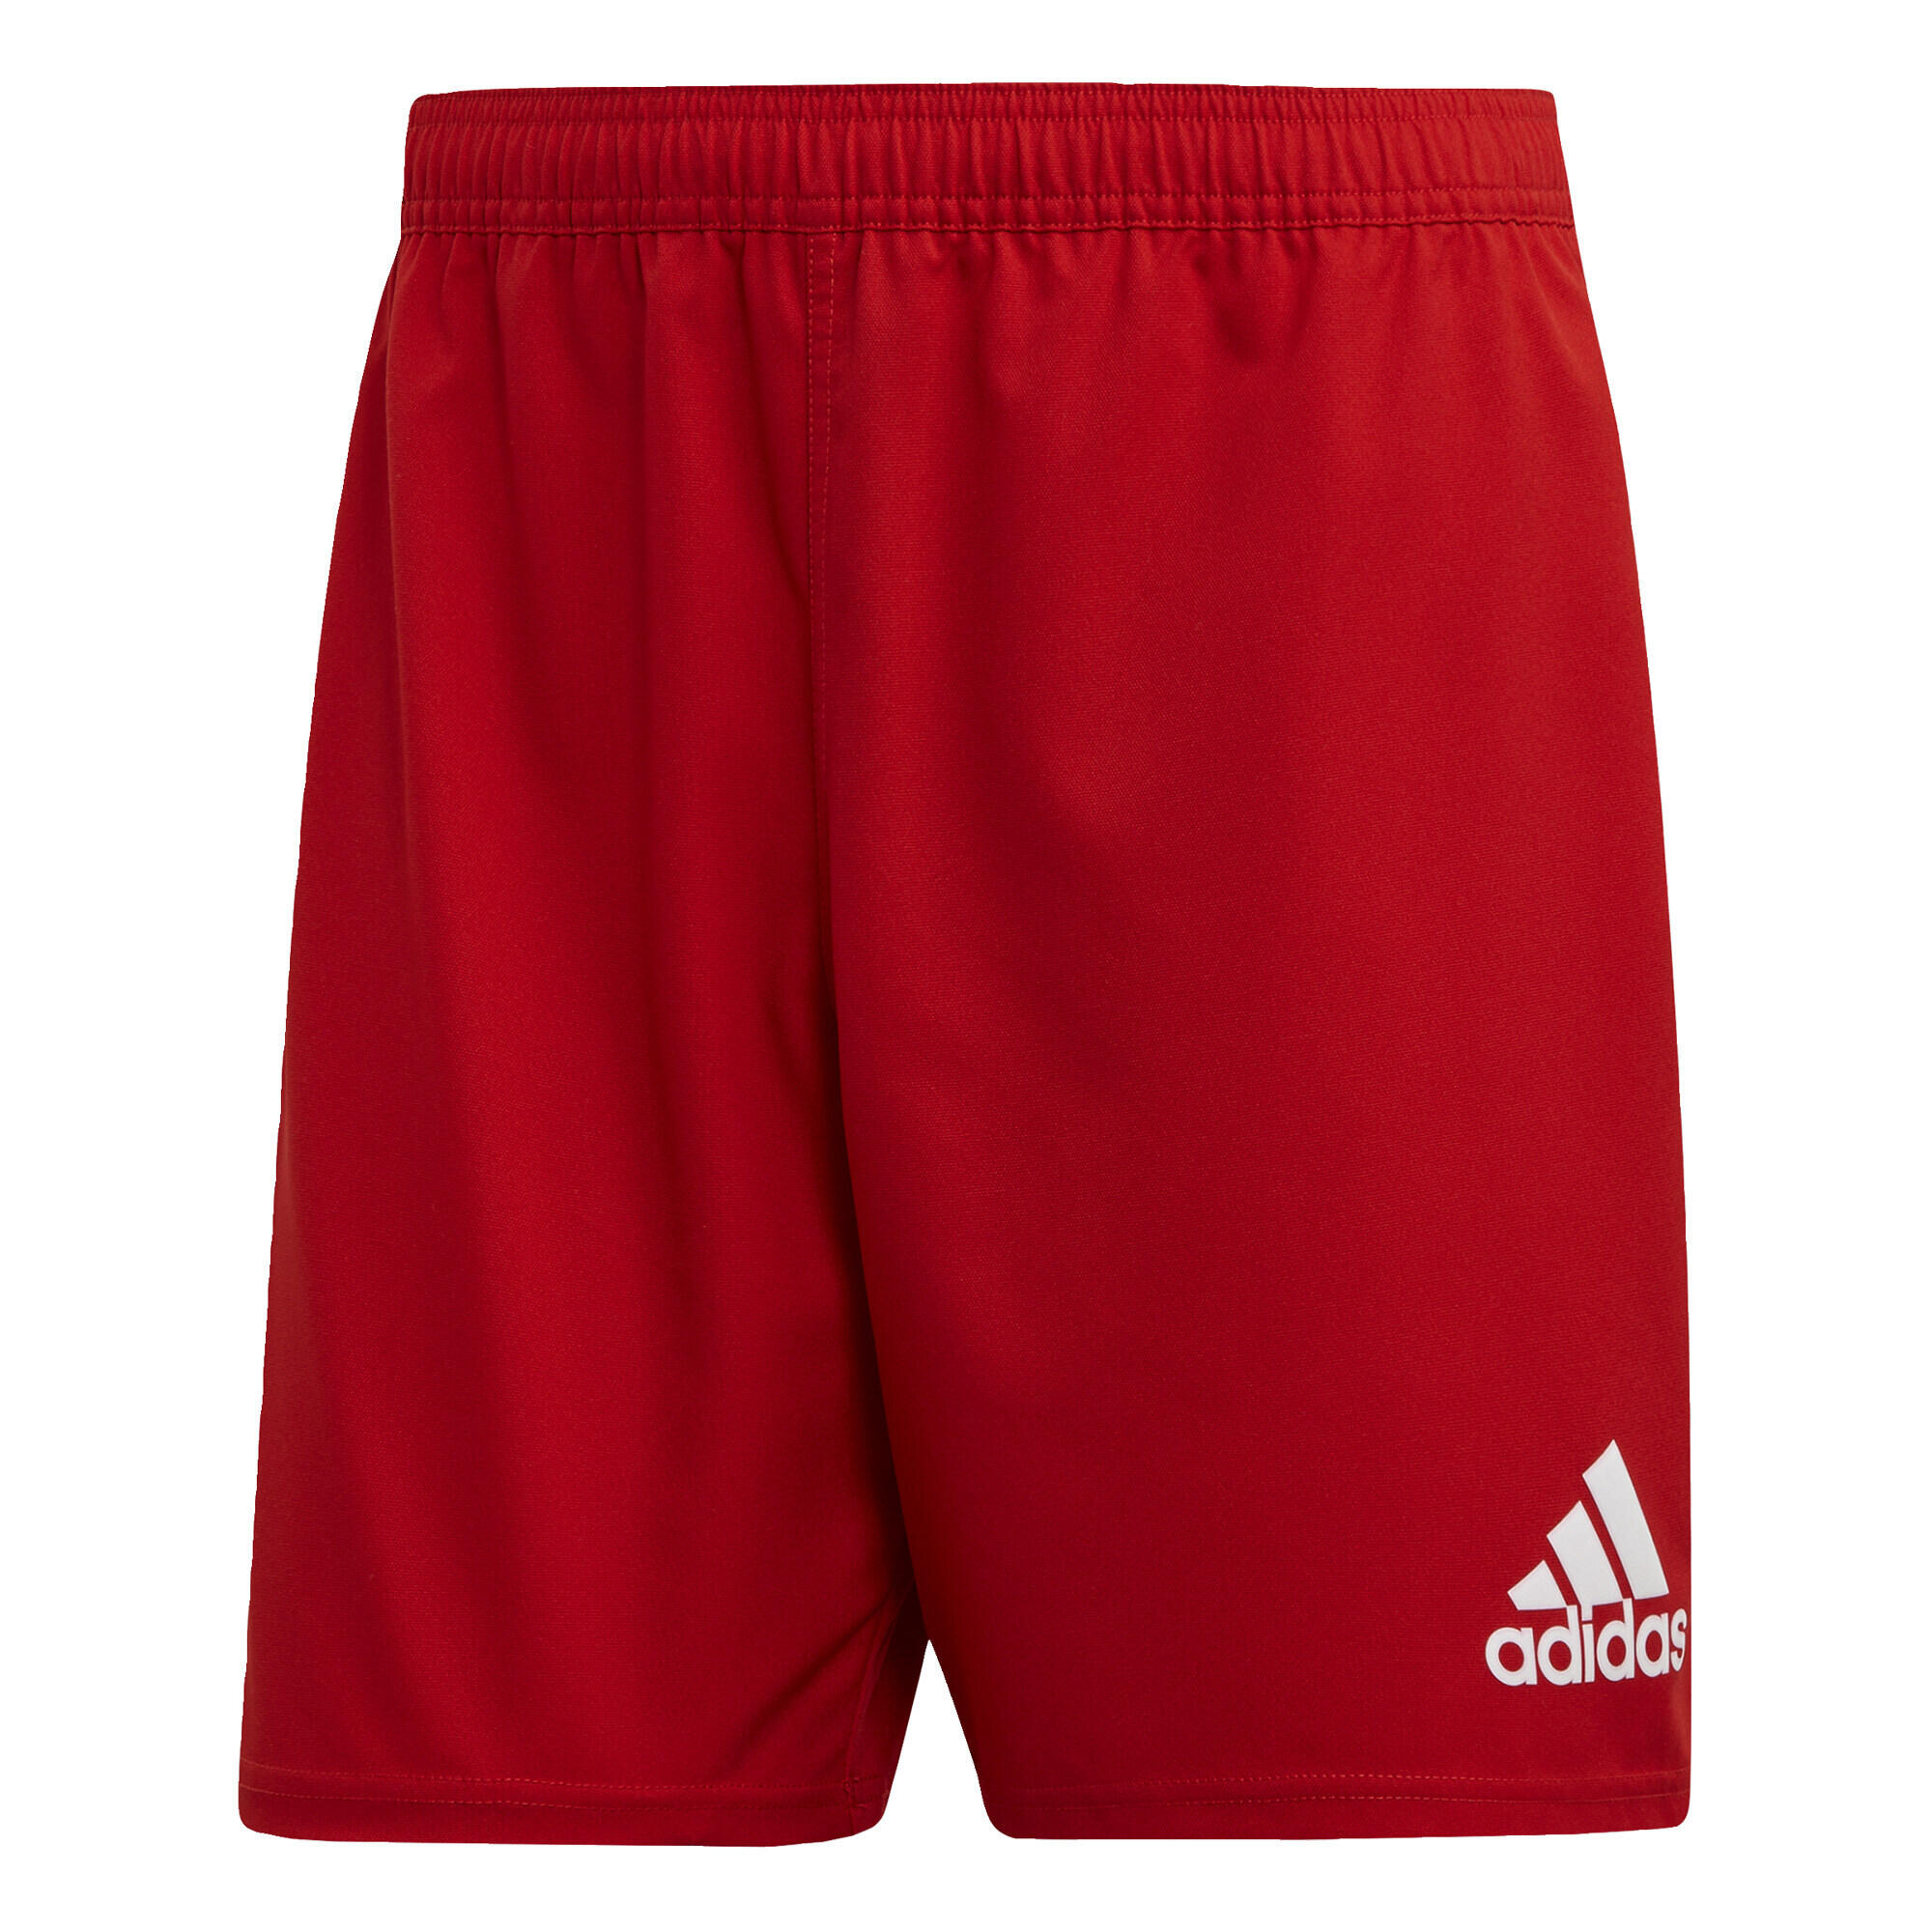 ADIDAS 3-Stripes Shorts